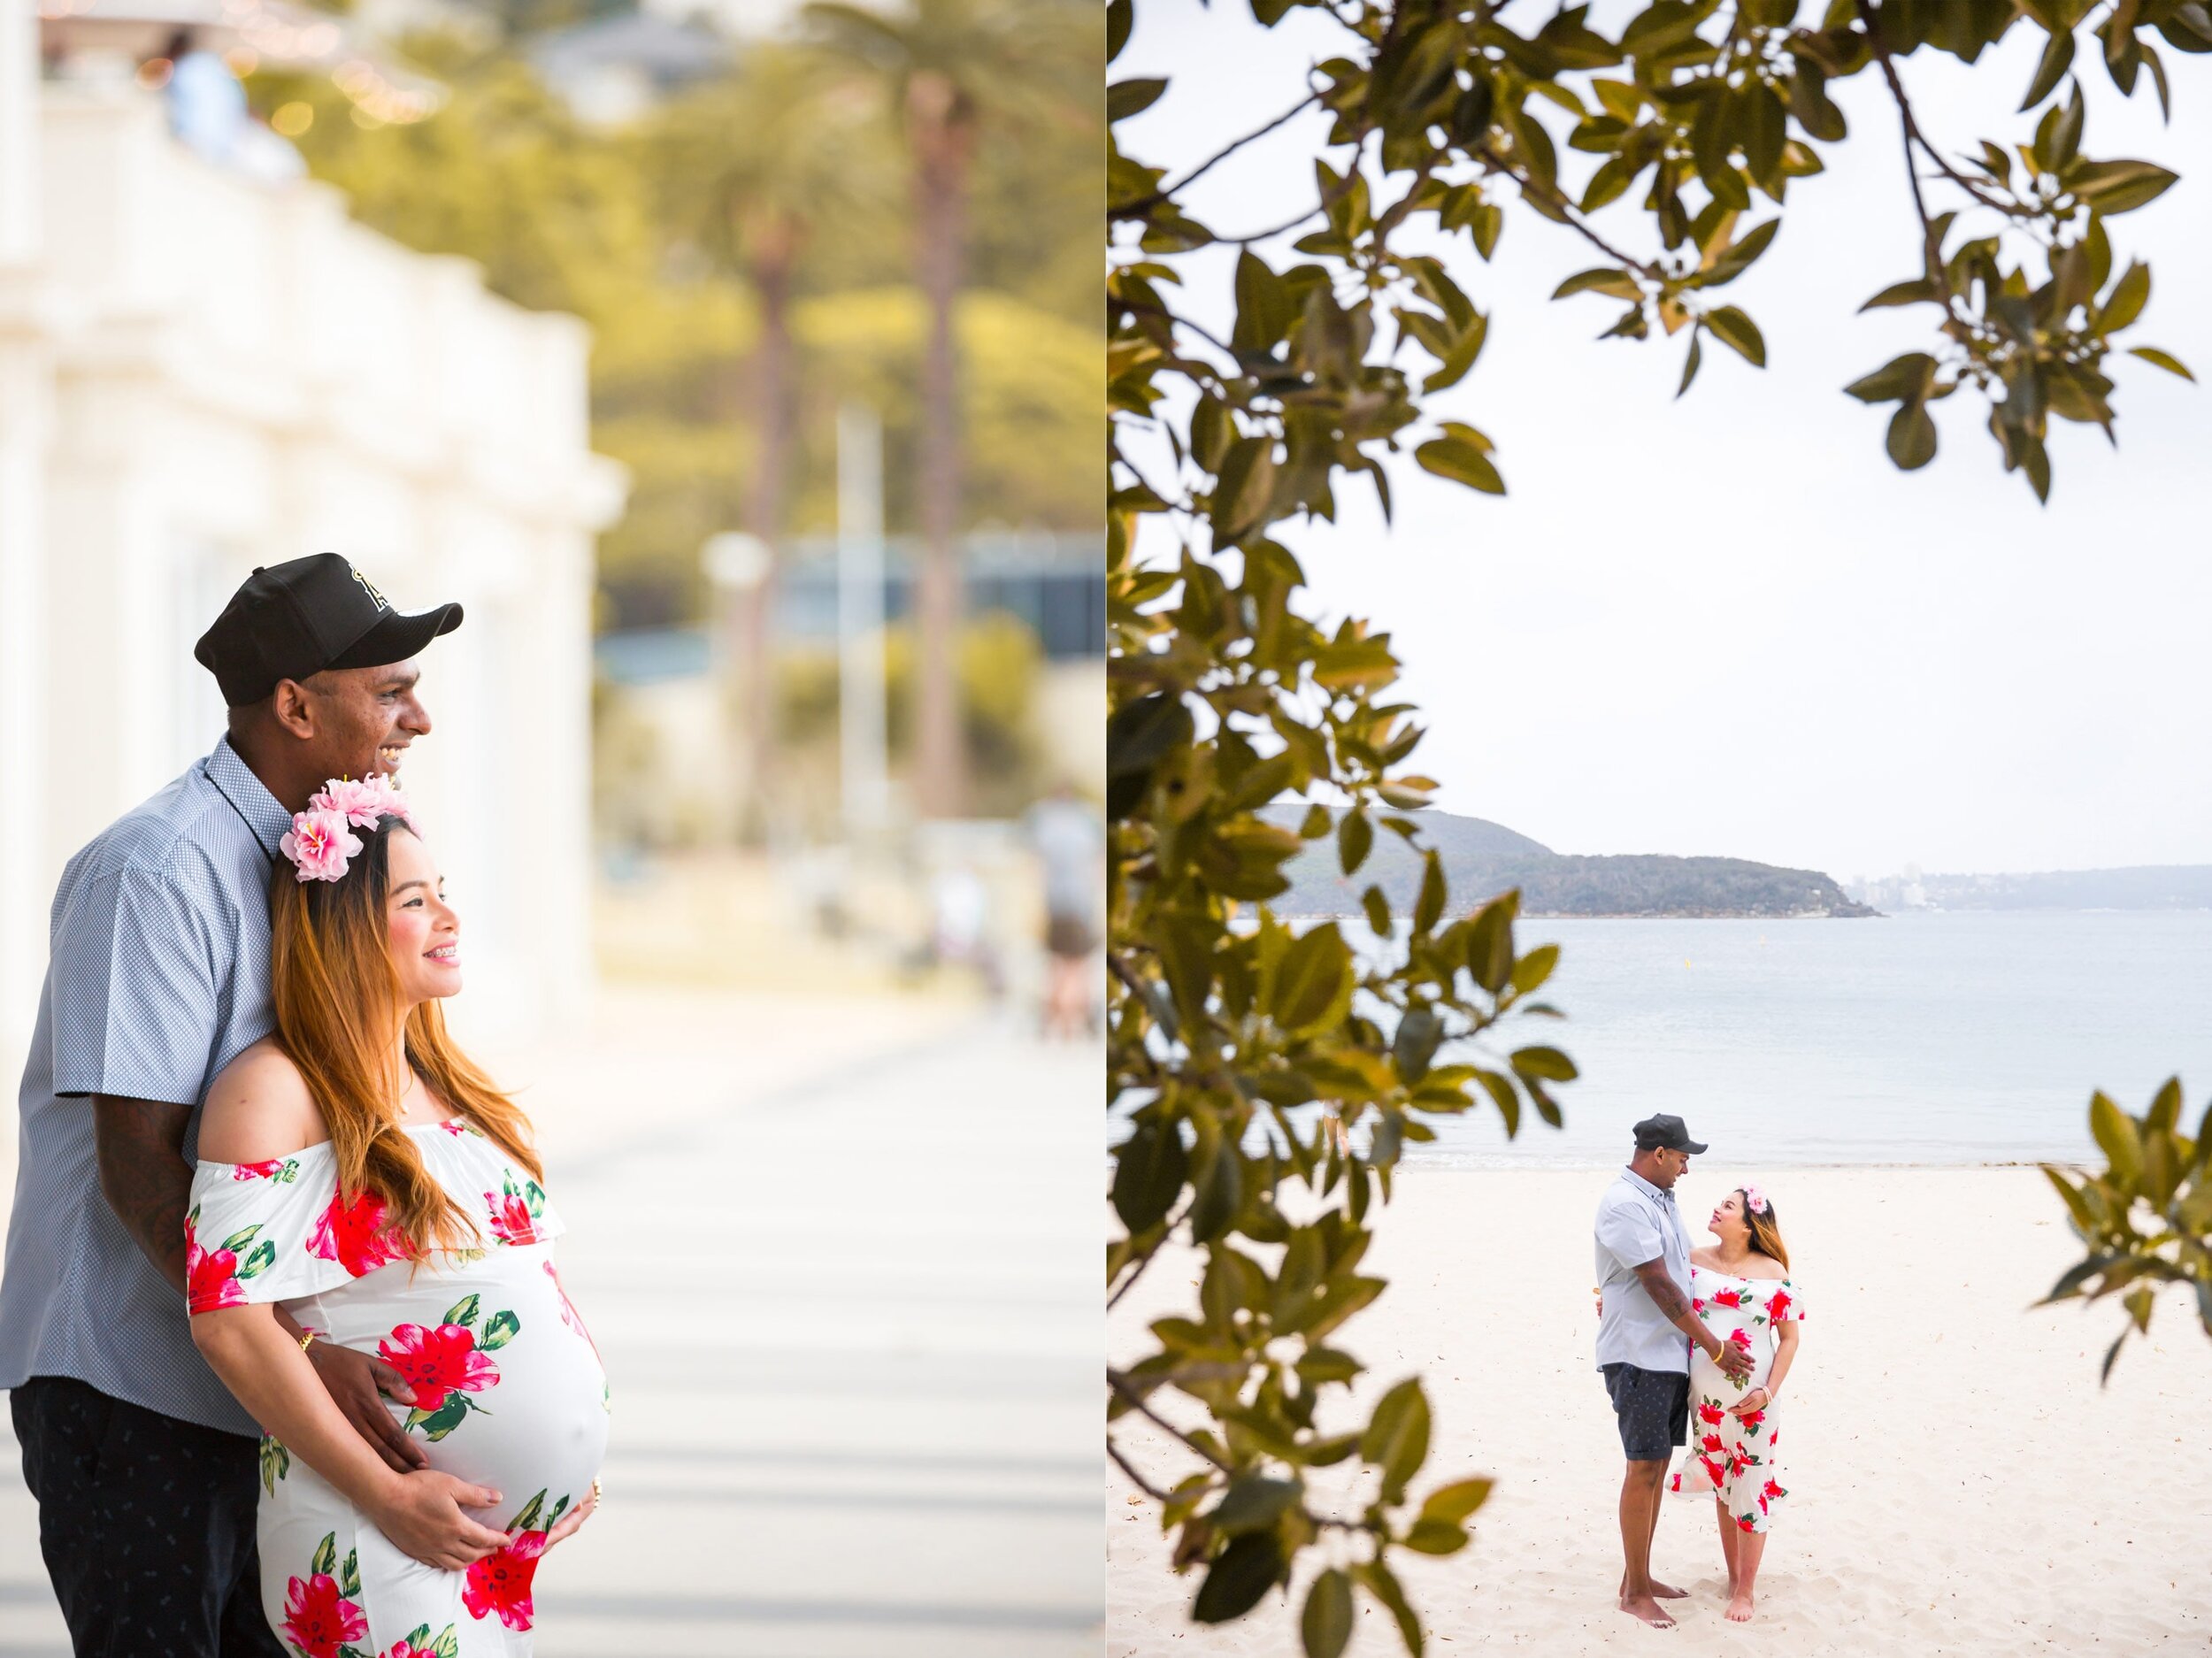 Sydney-maternity-photoshoot-outdoors-Balmoral-Beach-(19).jpg